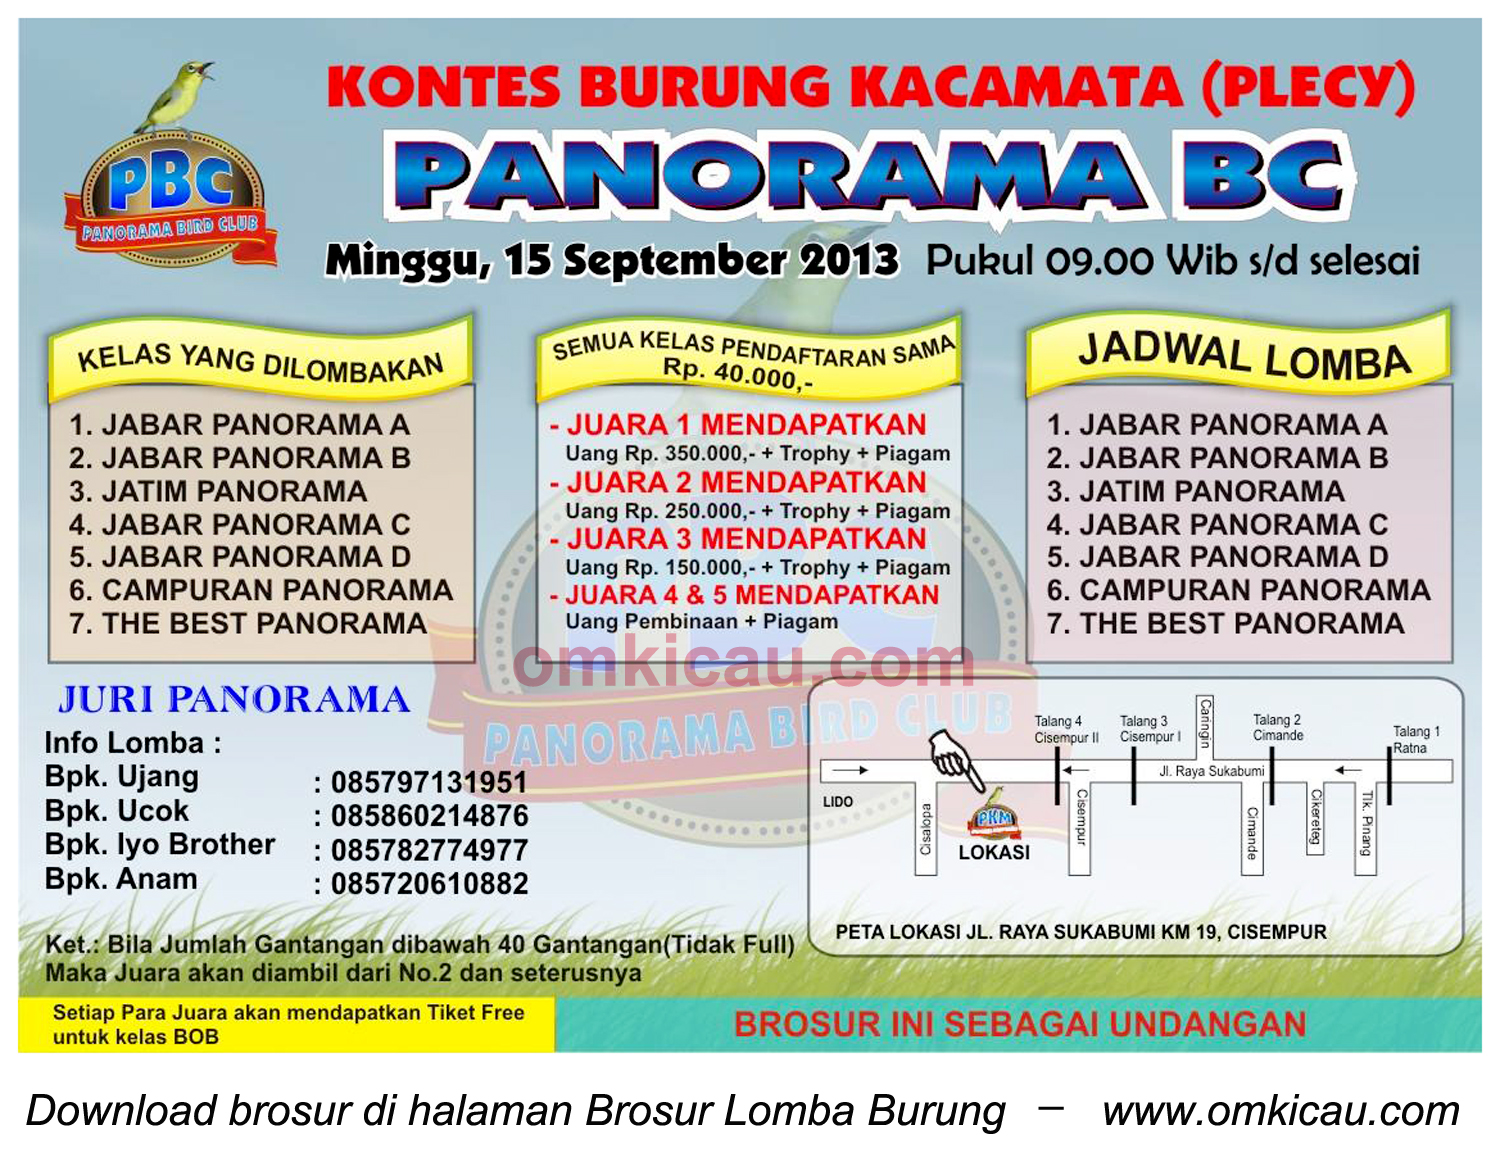 Brosur Kontes Burung Pleci Panorama BC - Bogor - 15 September 2013